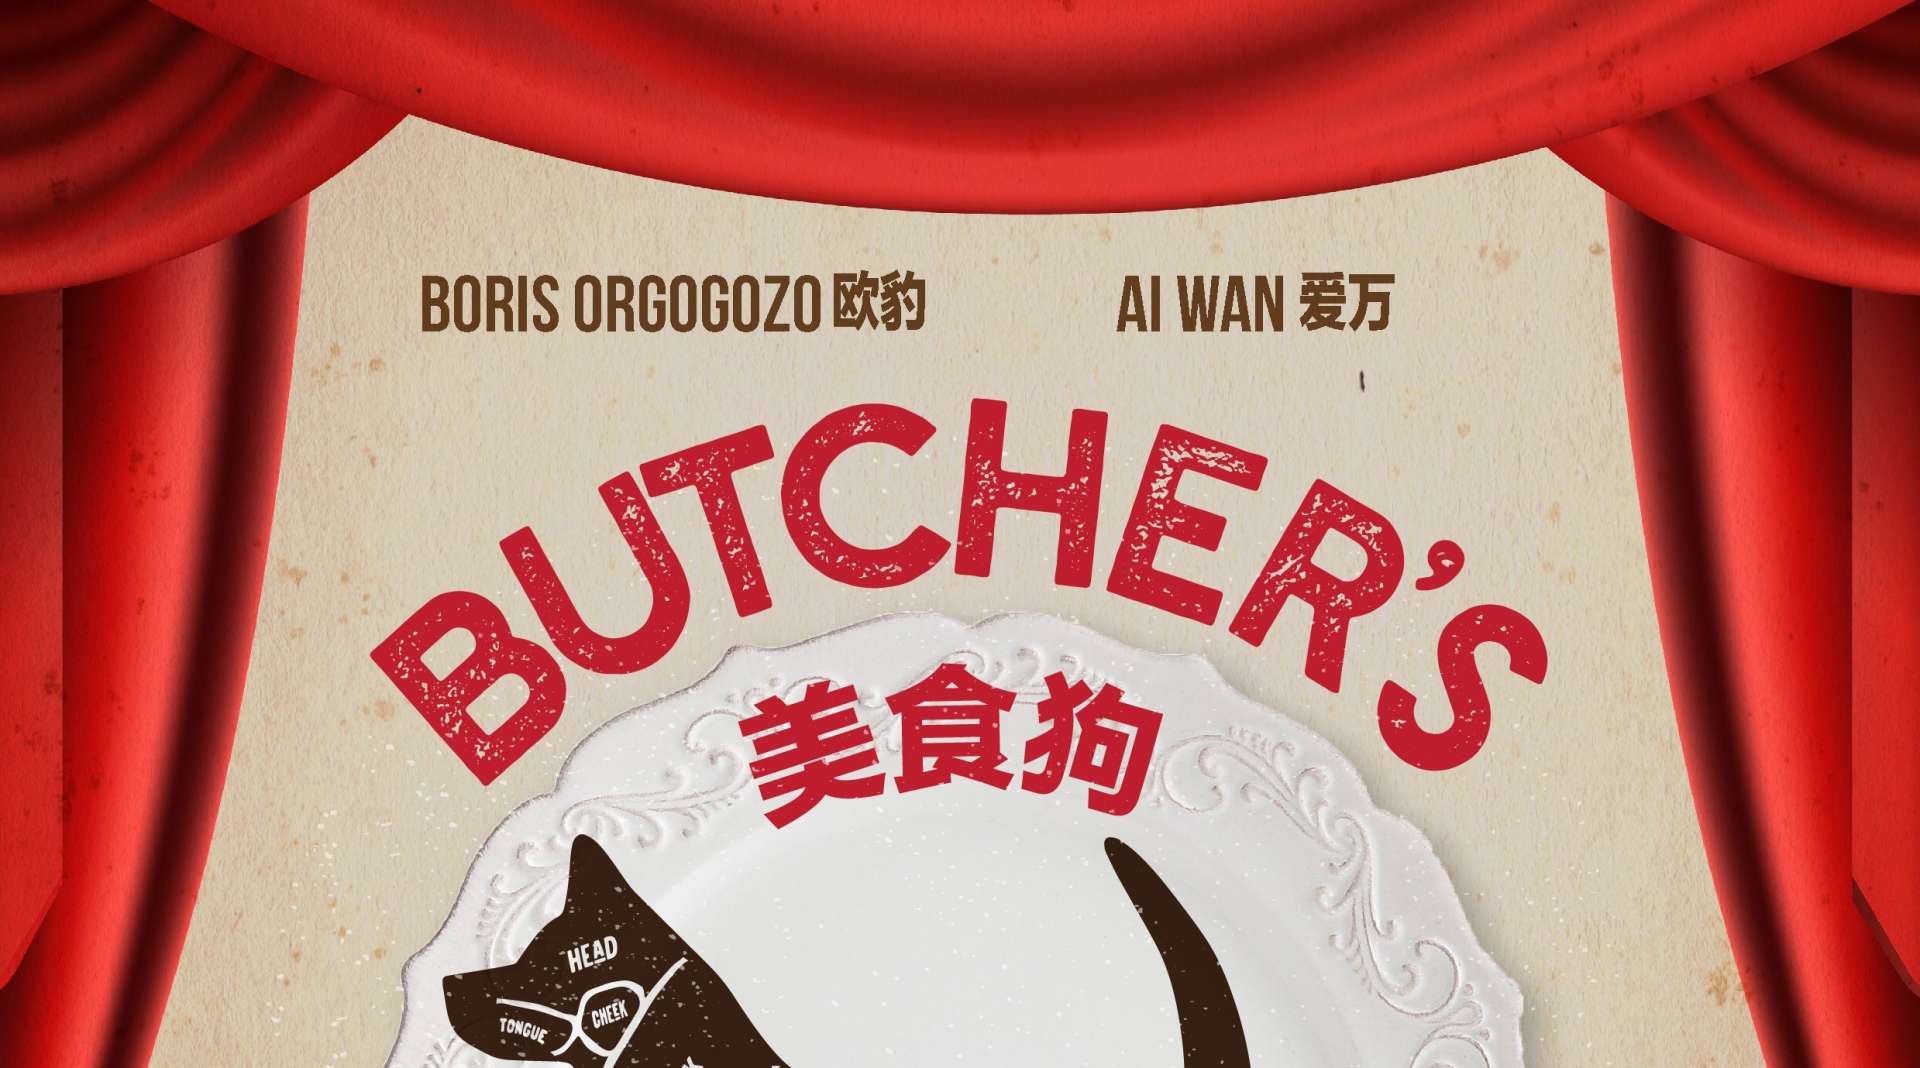 爱万主演的获奖短片《美食狗》“Butcher's Guide